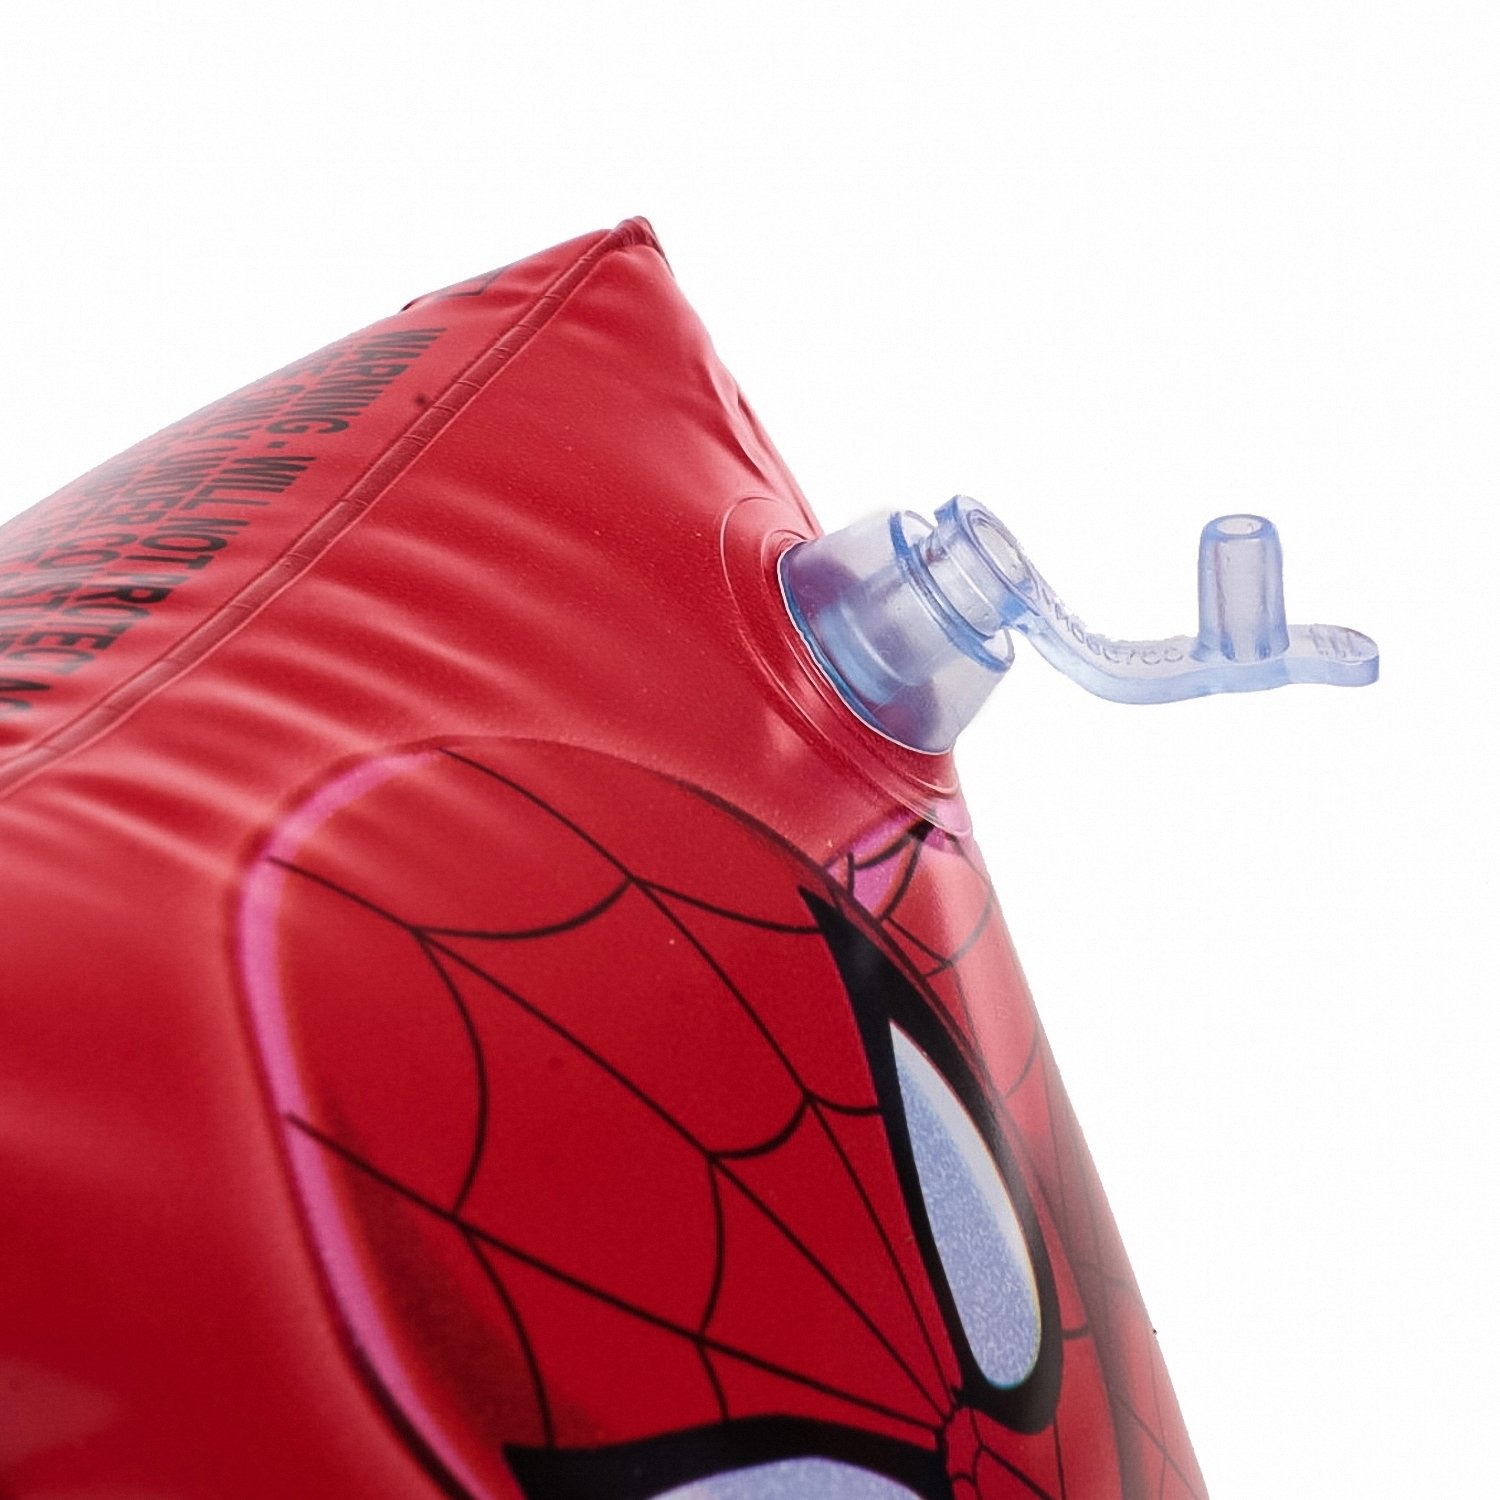 Нарукавники Bestway Spider-Man 98001